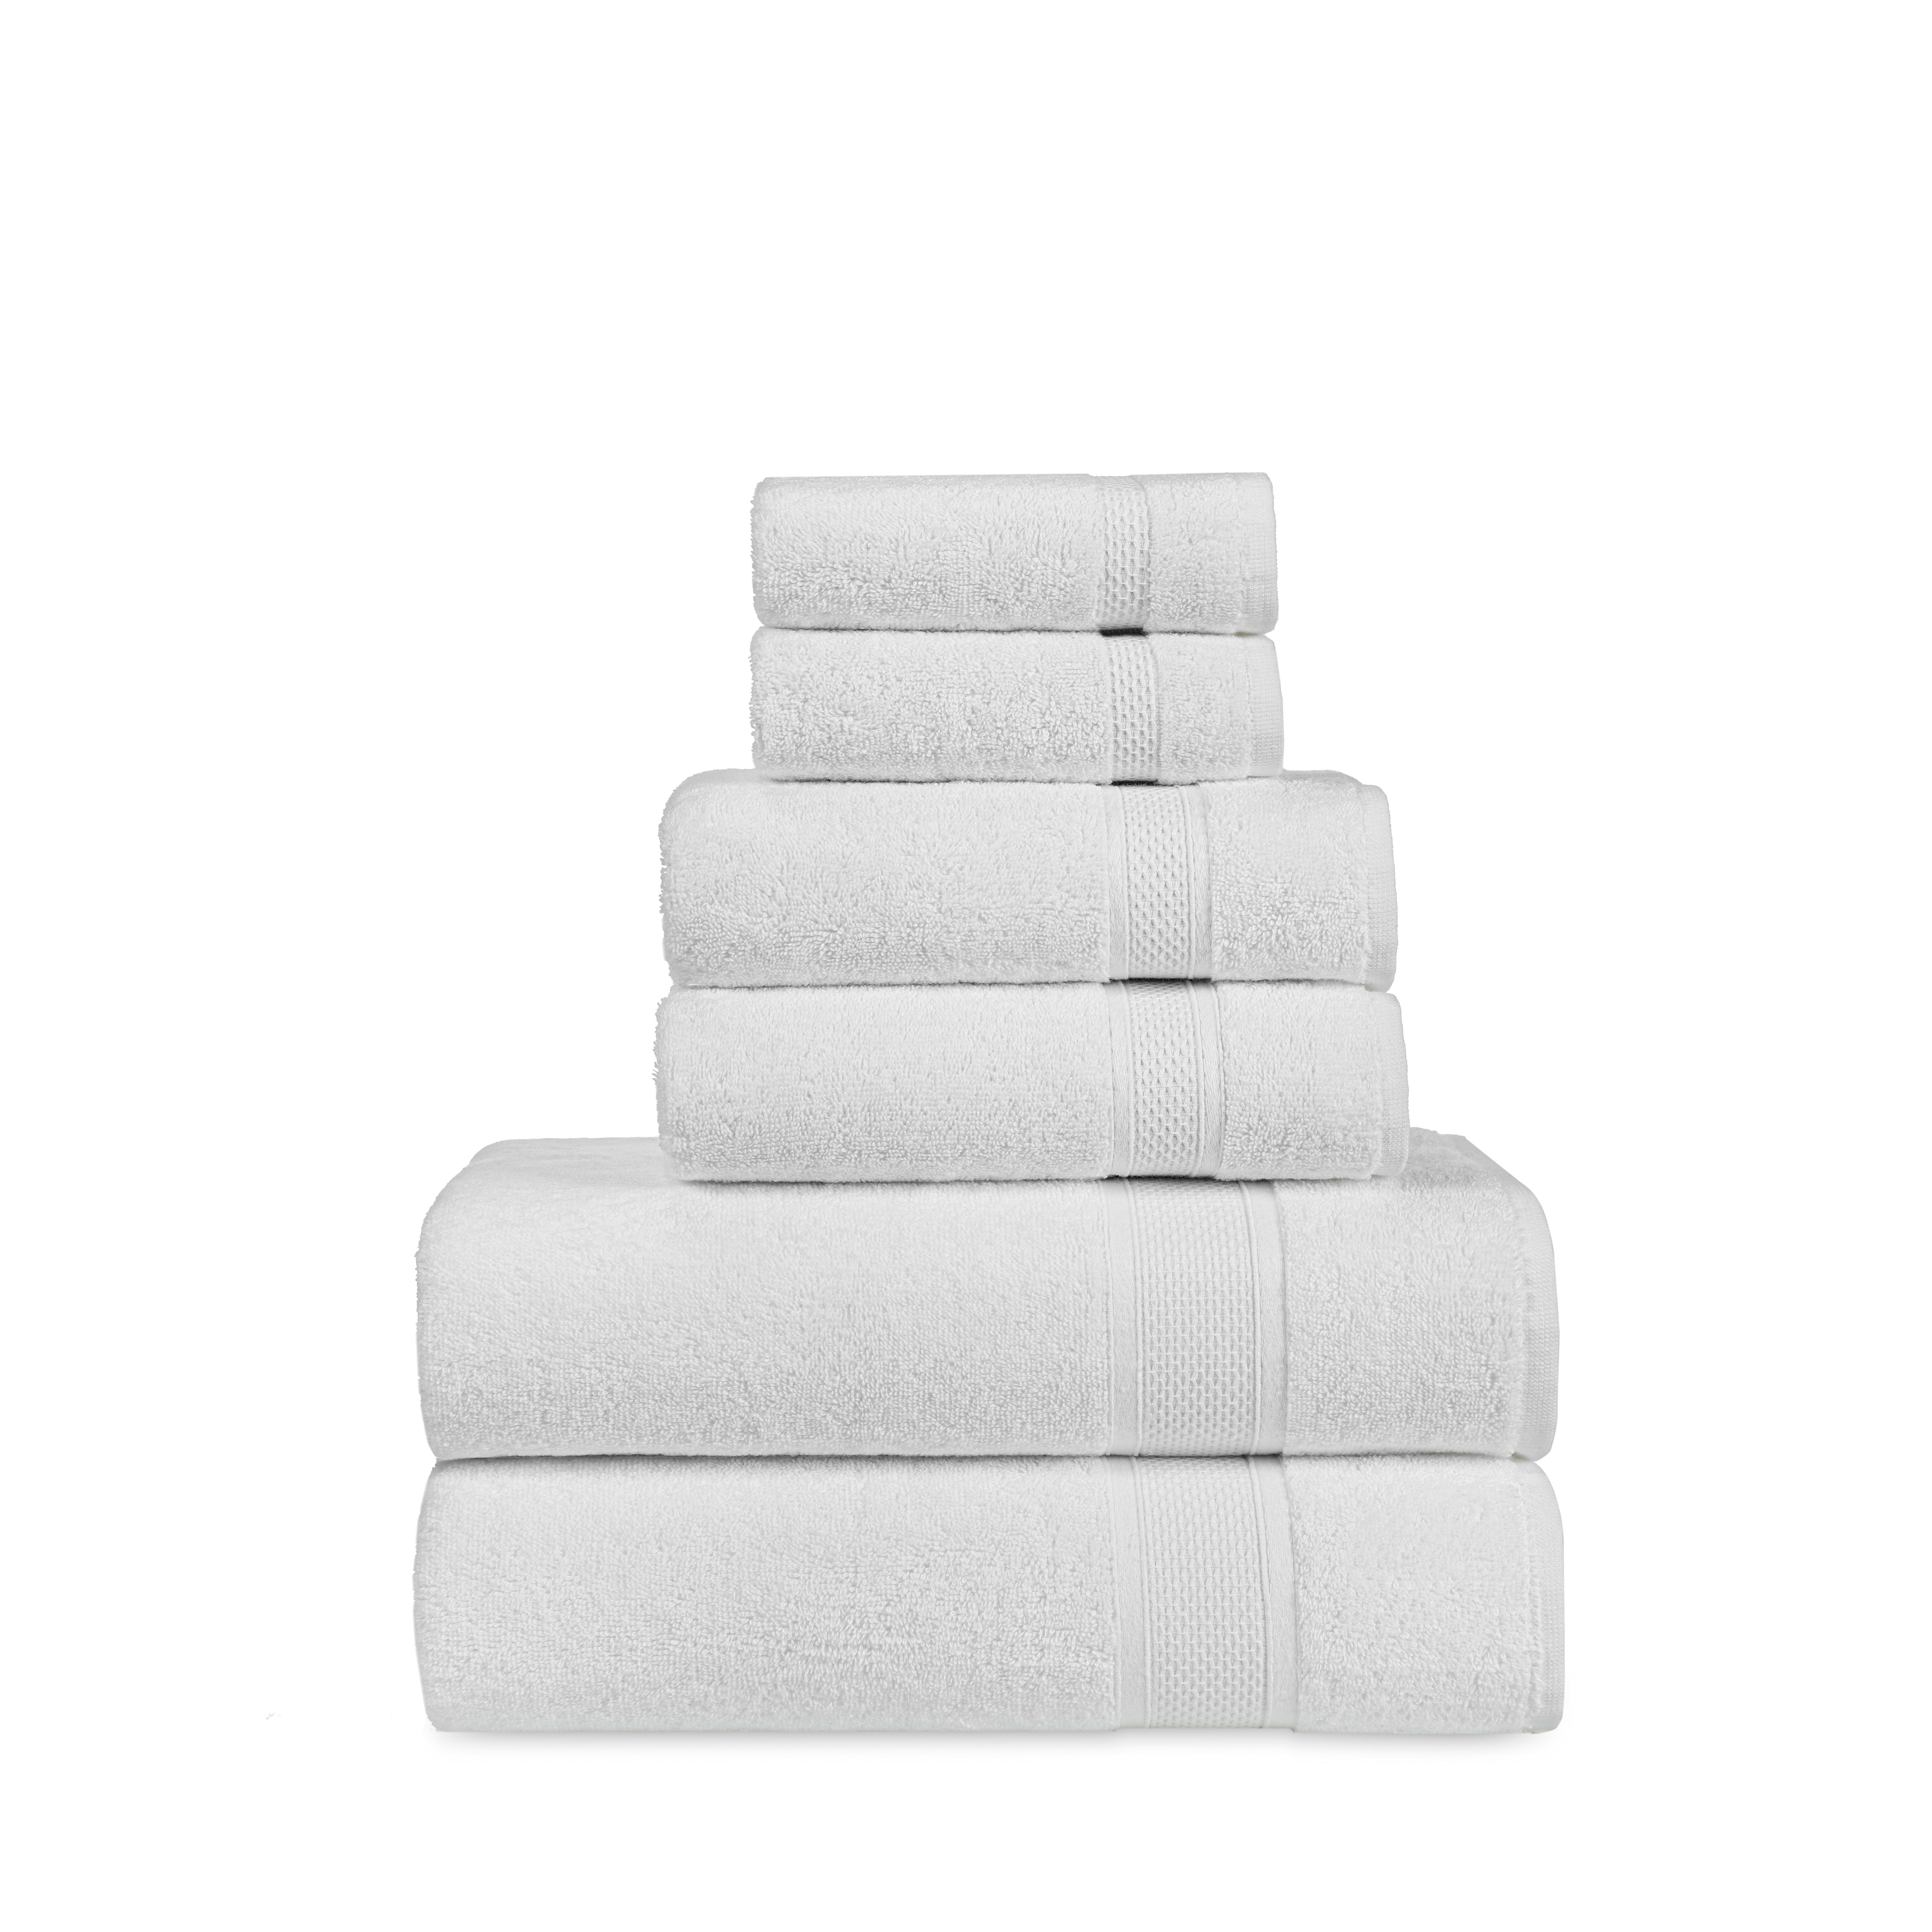 Cifelli Home Turkish Cotton 6 Piece Towel Set Luxury Hotel Quality - N/A -  Bed Bath & Beyond - 33344218